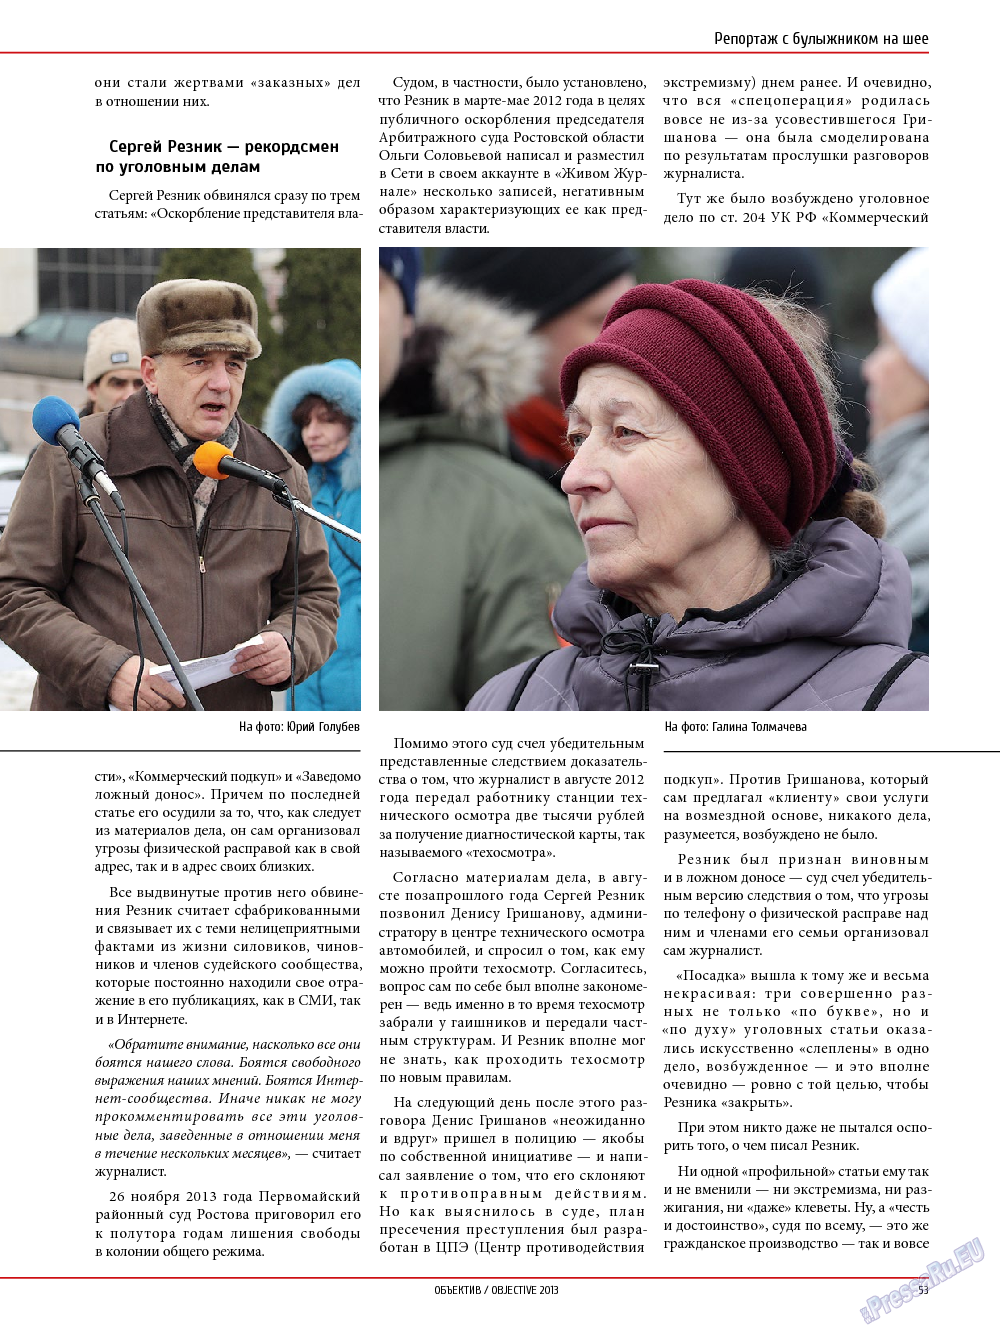 Объектив EU, журнал. 2014 №1 стр.53